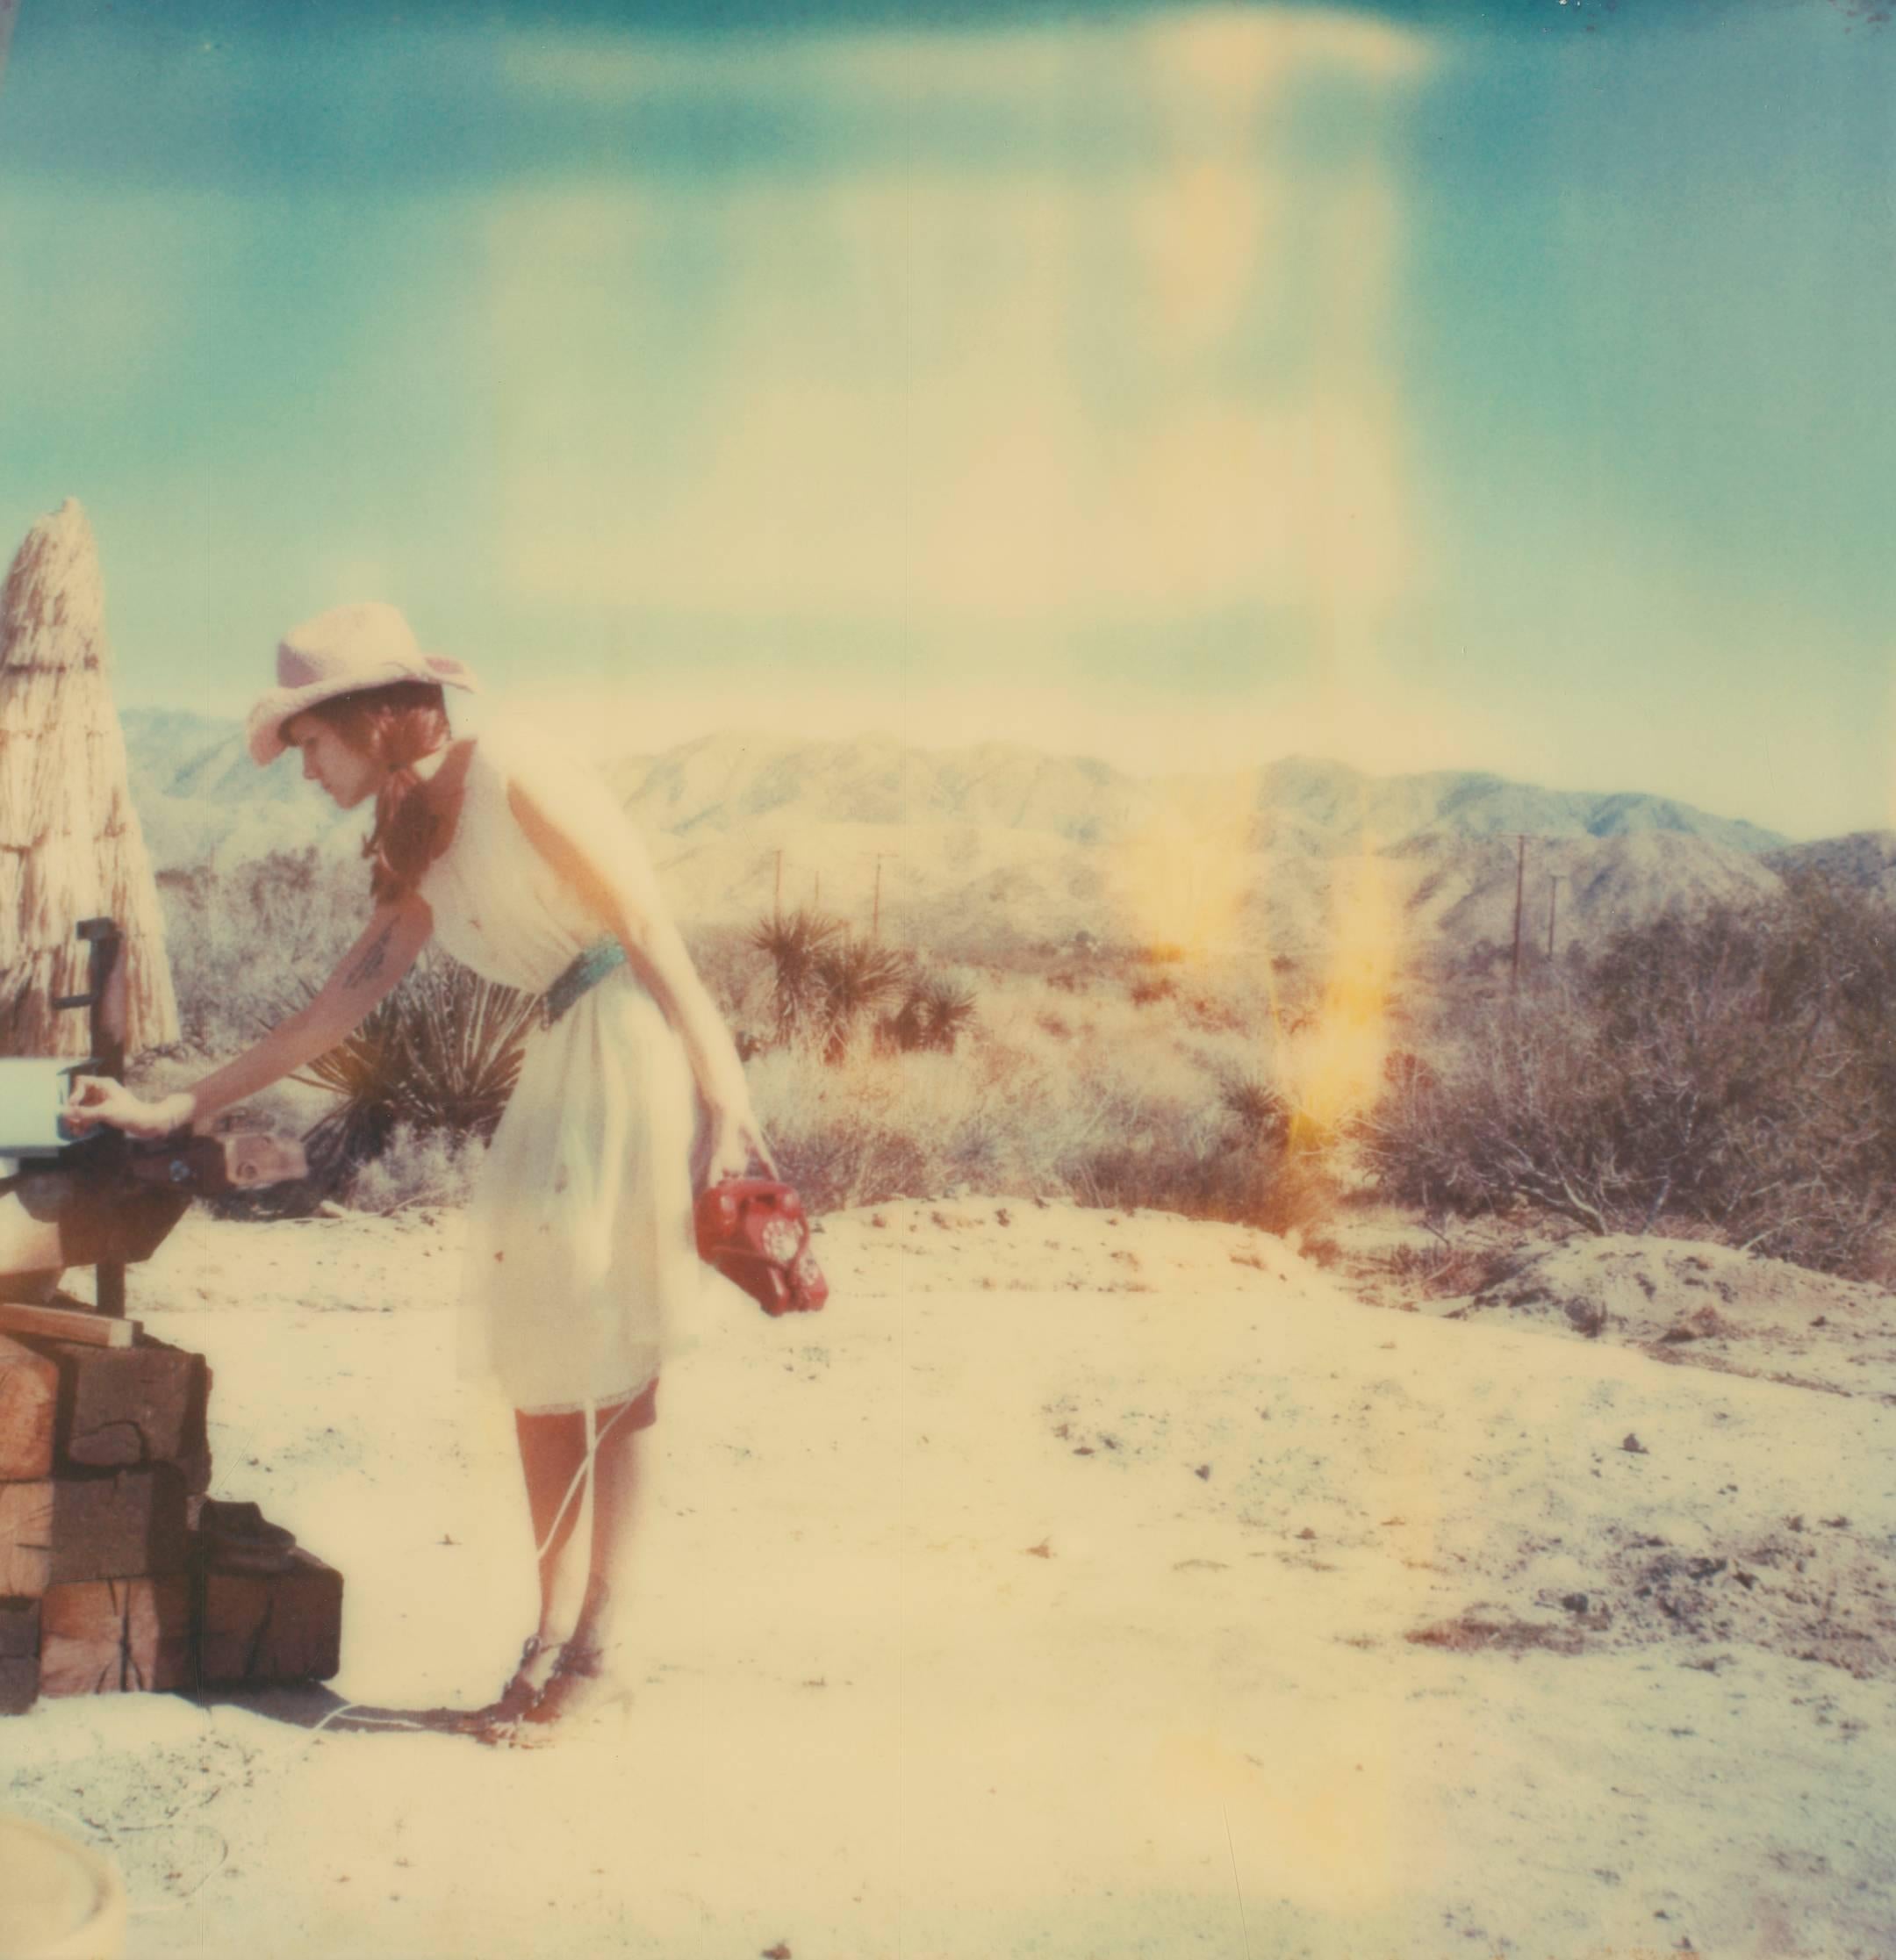 Stefanie Schneider Figurative Photograph - Memories of Love (The Girl behind the White Picket Fence) - Polaroid